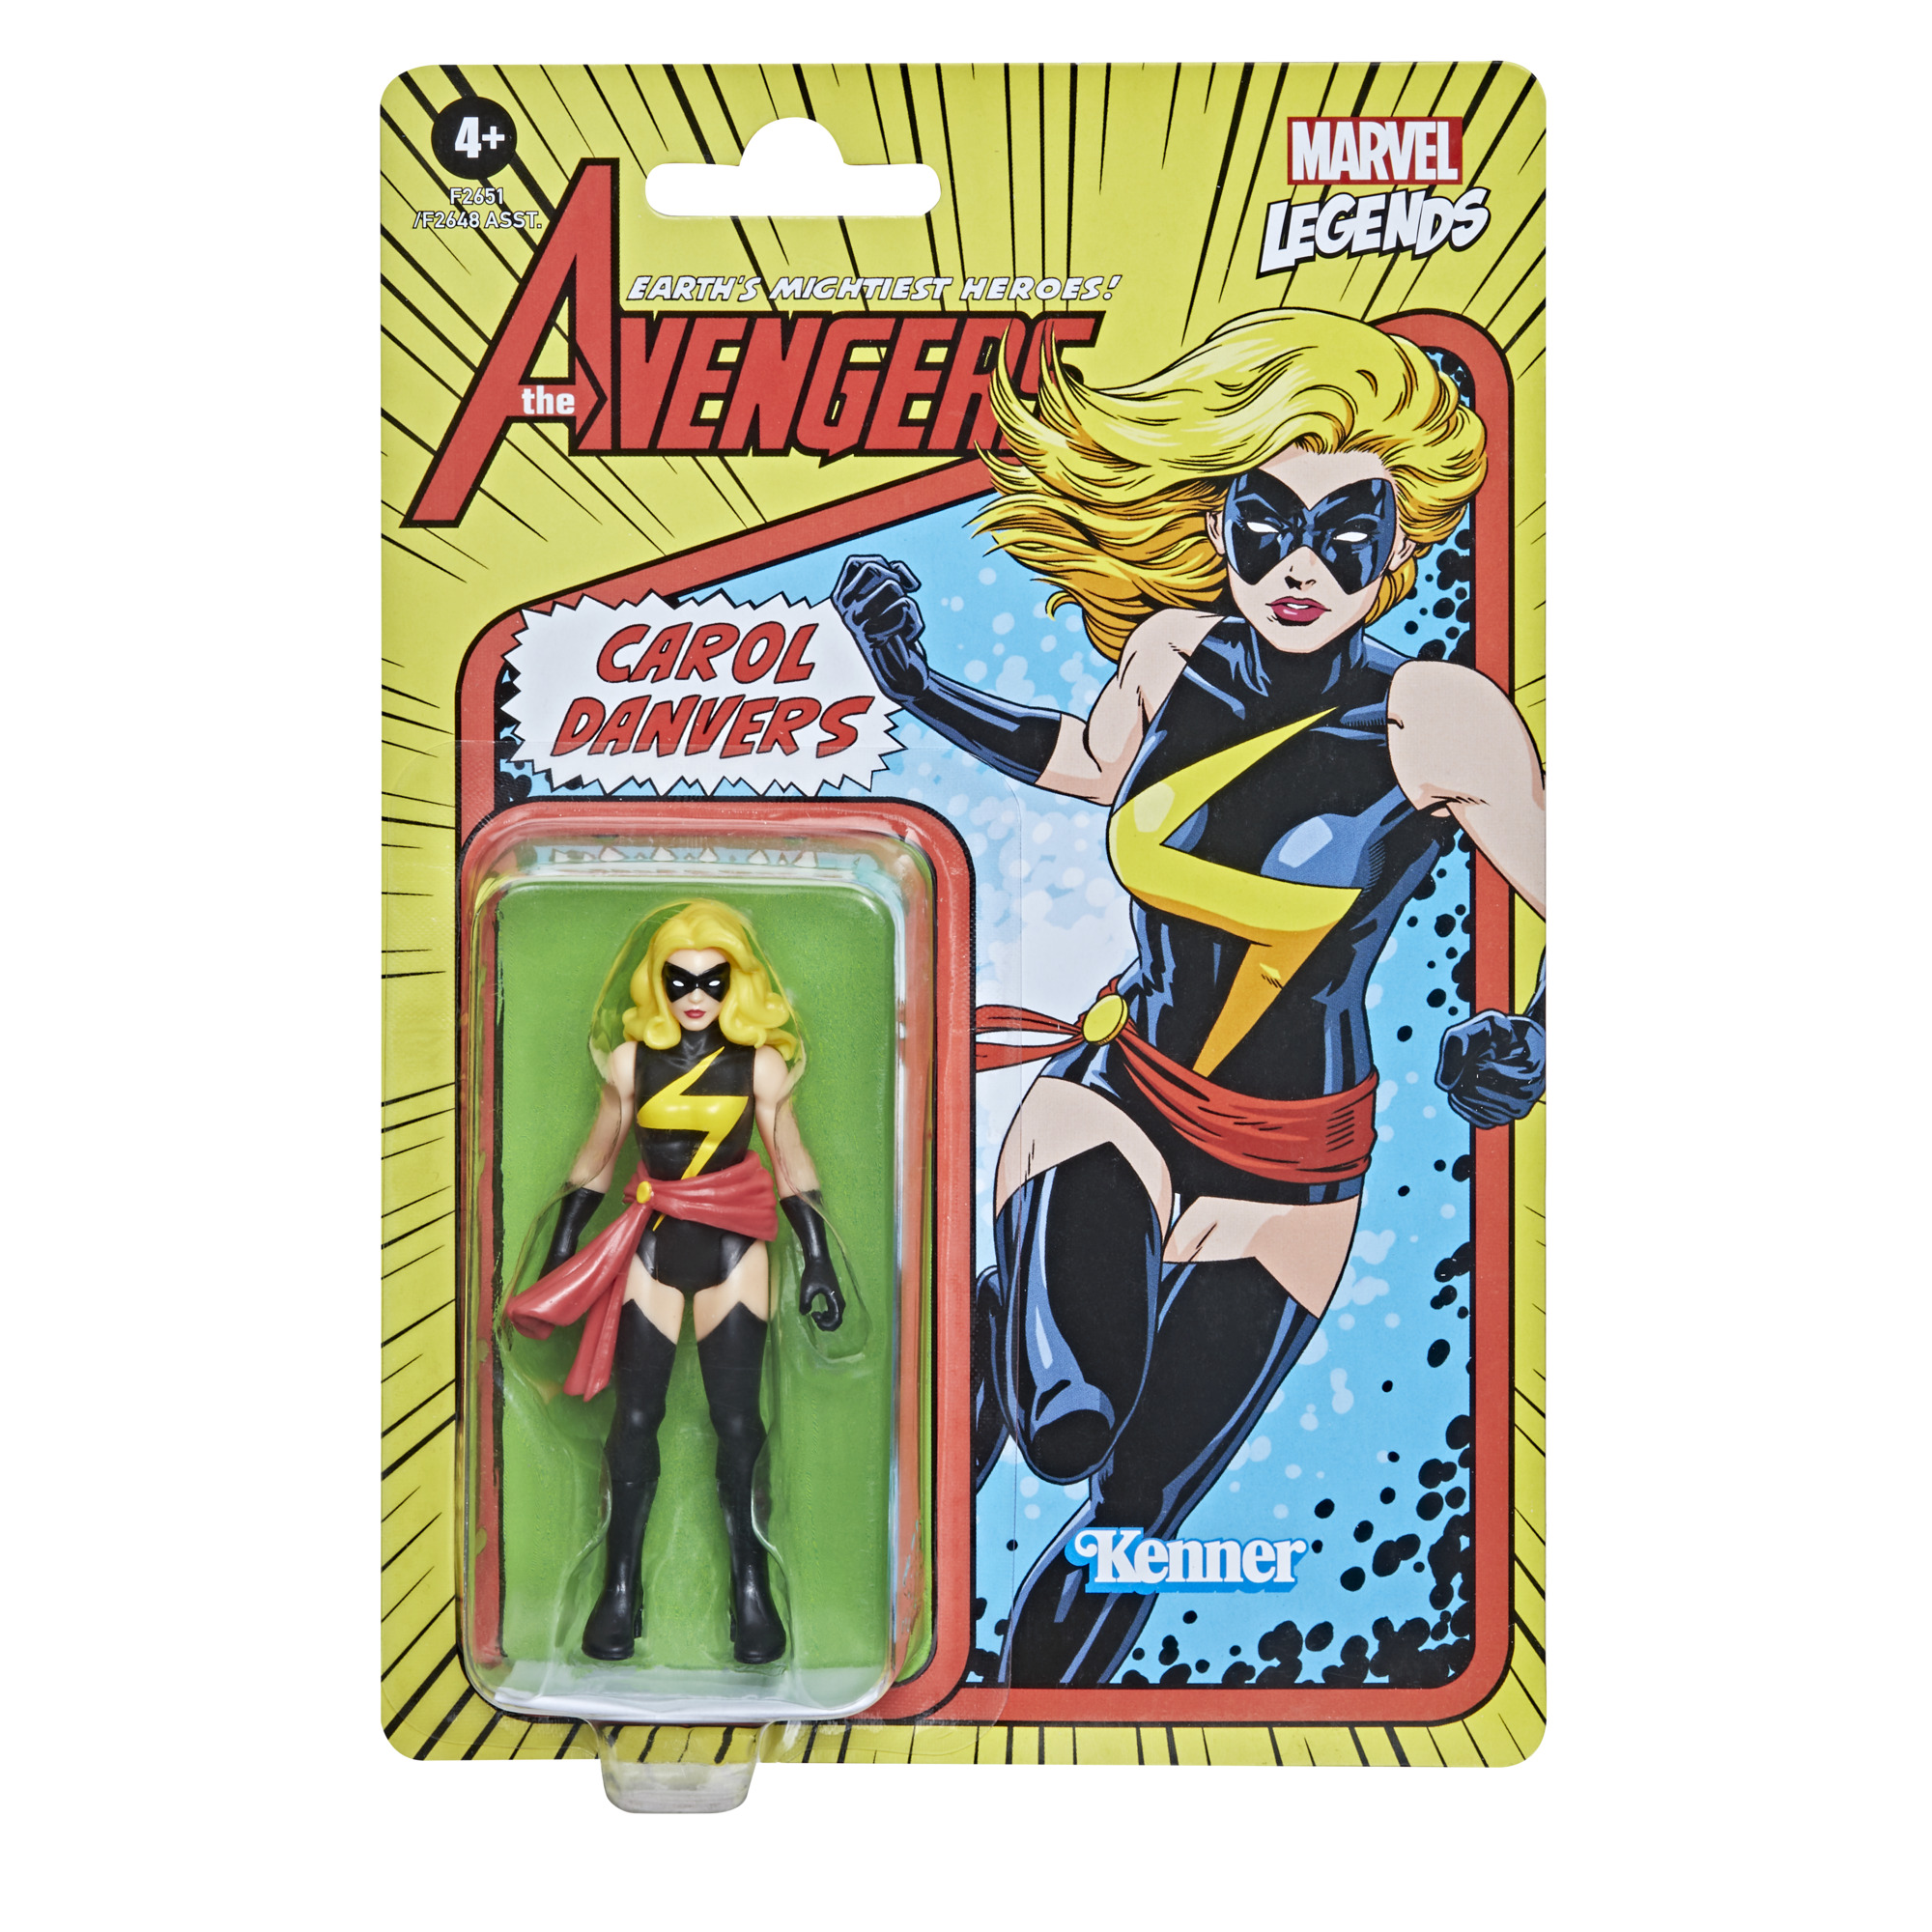 Carol Danvers carded